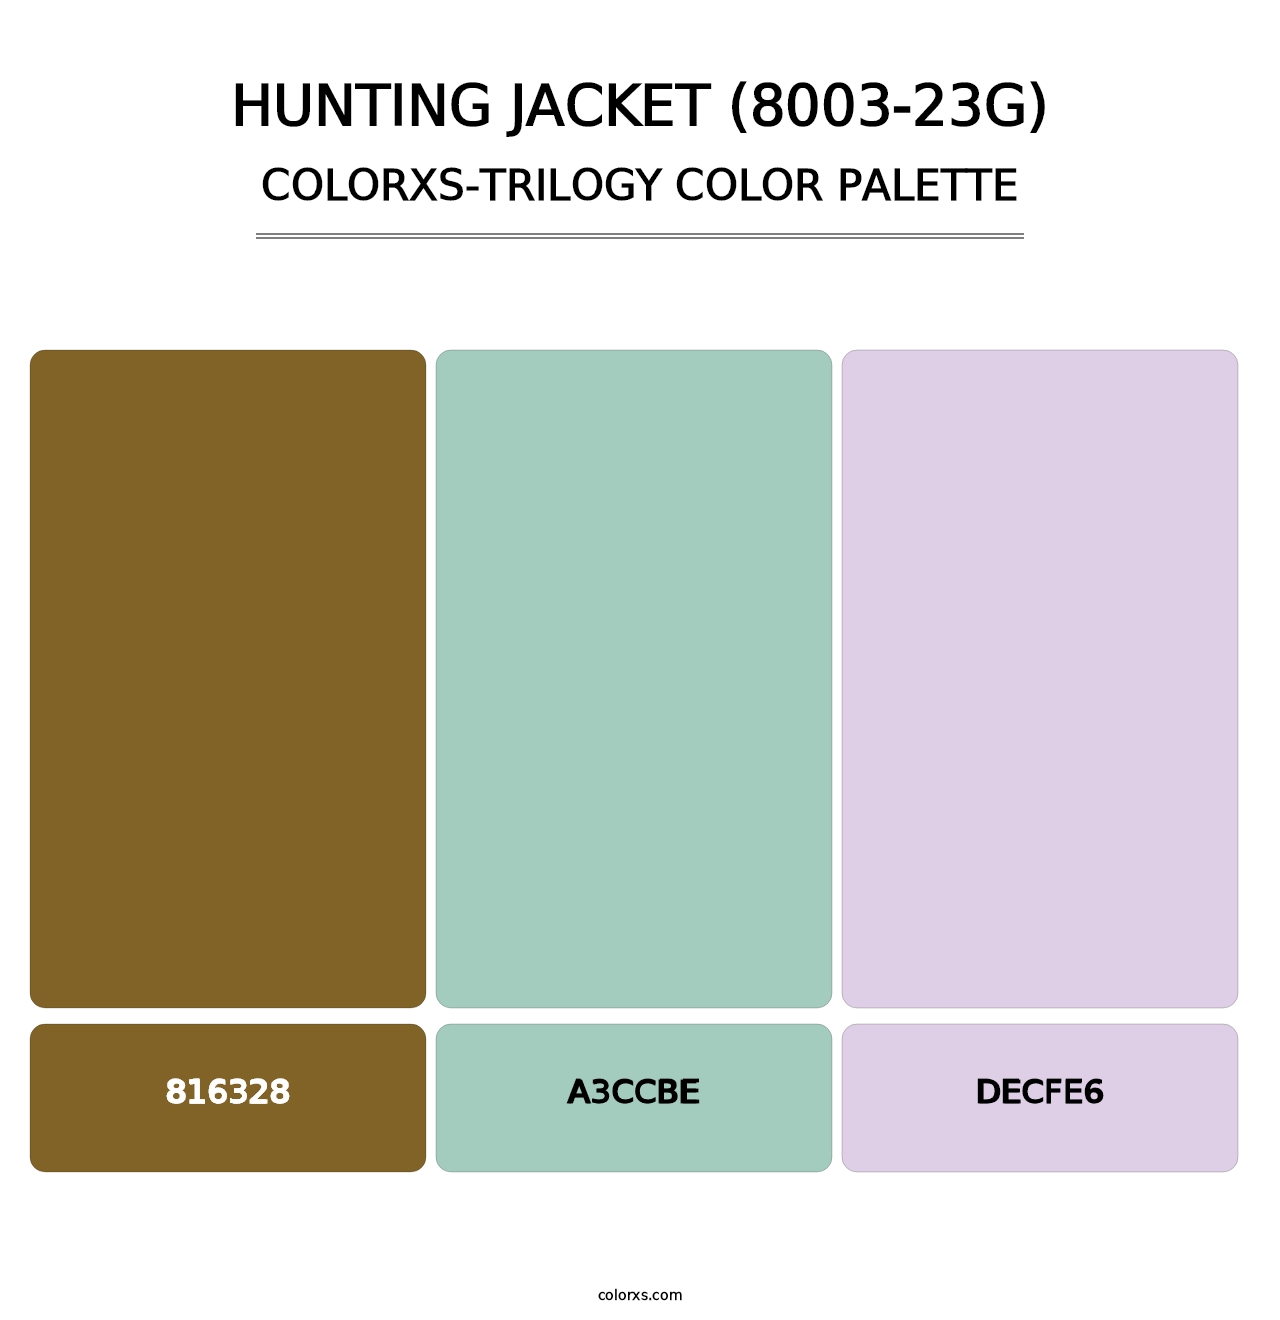 Hunting Jacket (8003-23G) - Colorxs Trilogy Palette